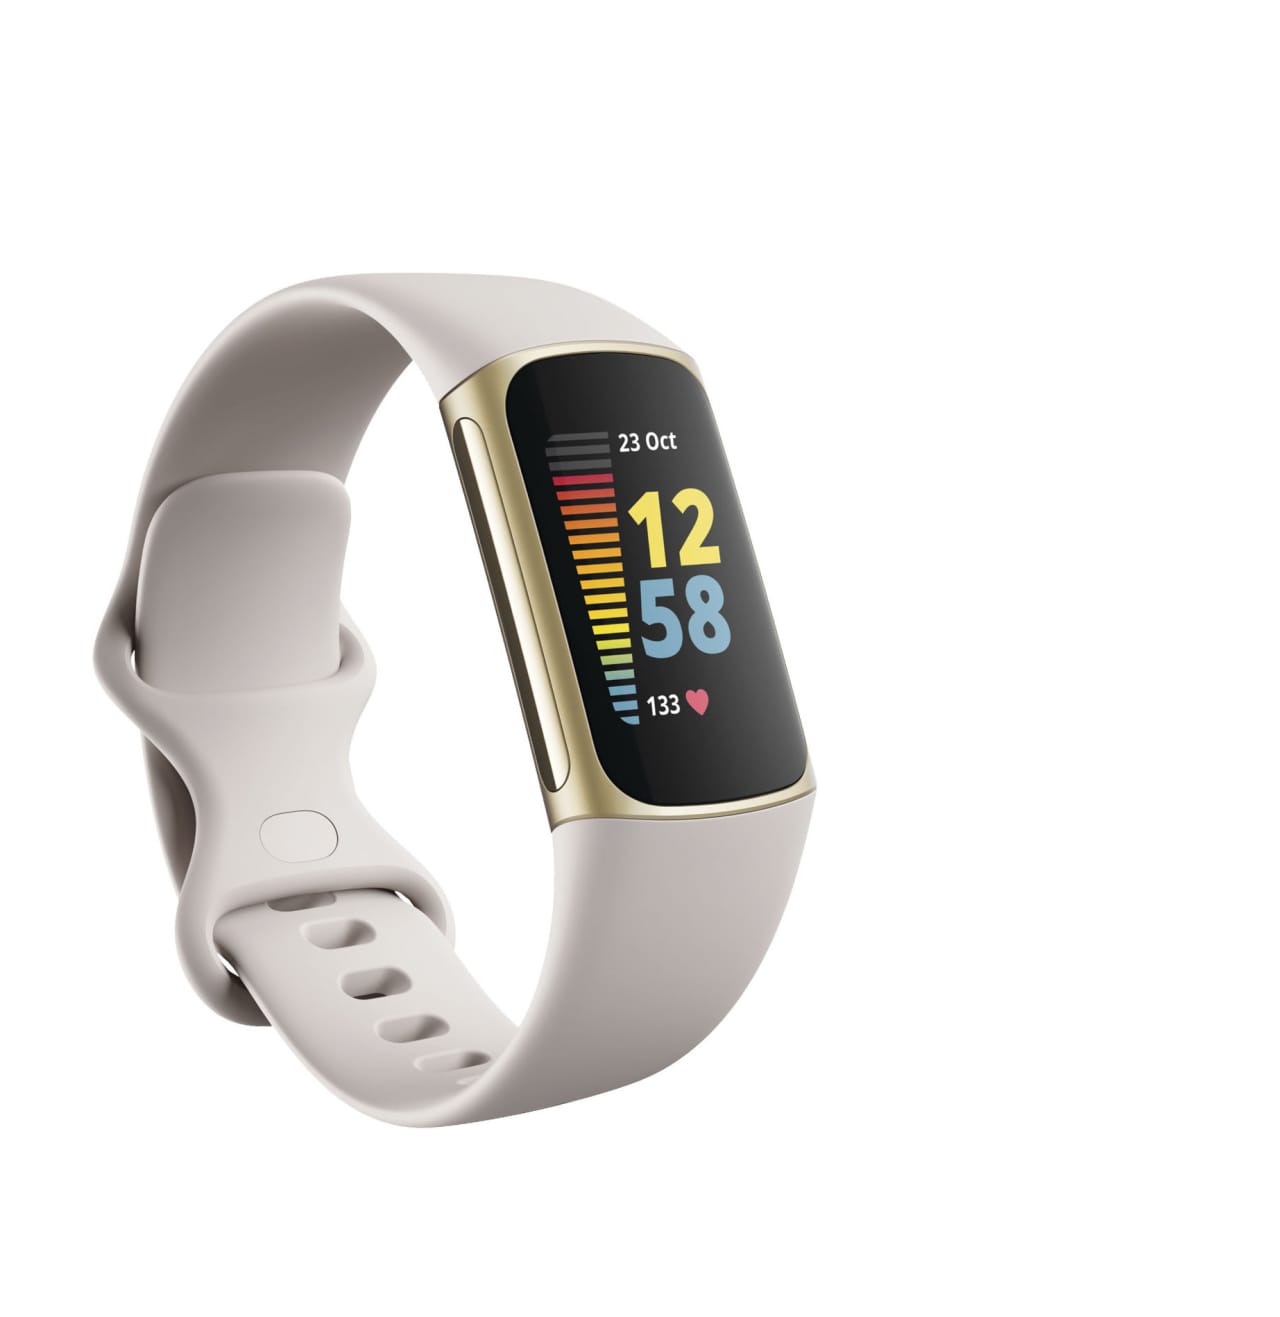 Lighter, sleeker, longer lasting – introducing the new Suunto 5 Peak GPS  sport watch